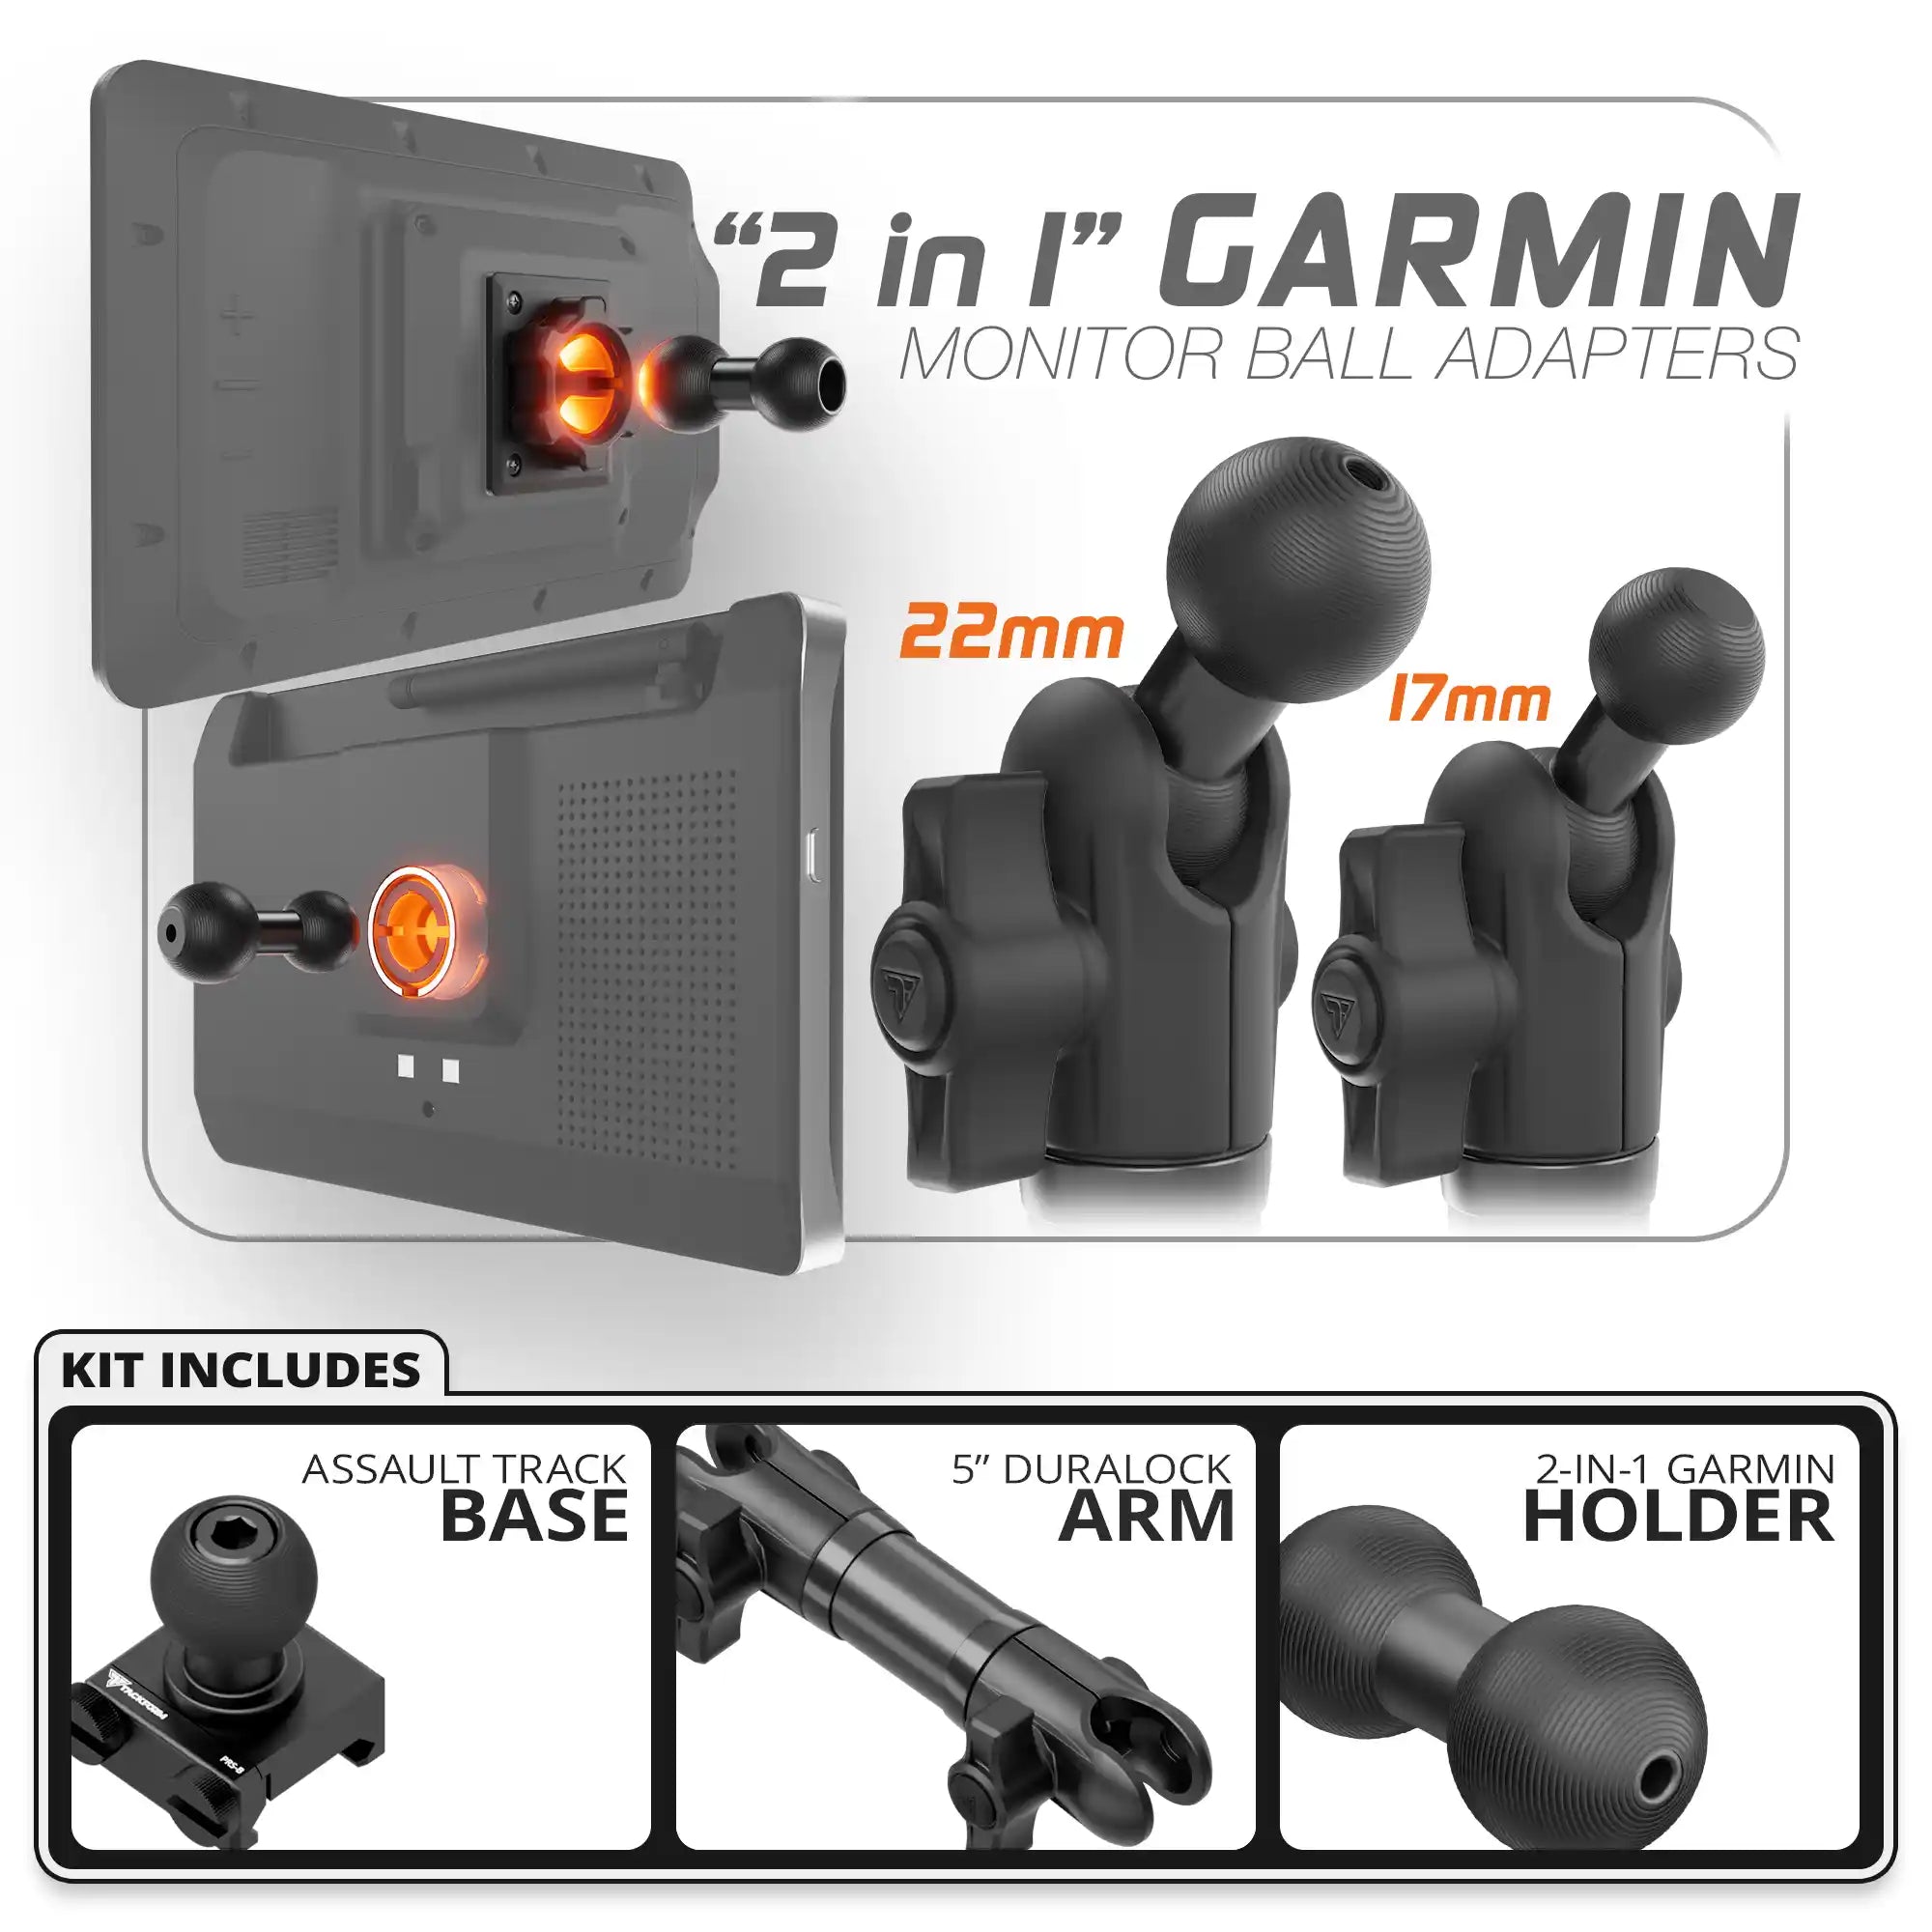 Garmin | Assault Track Base | 5" DuraLock Arm